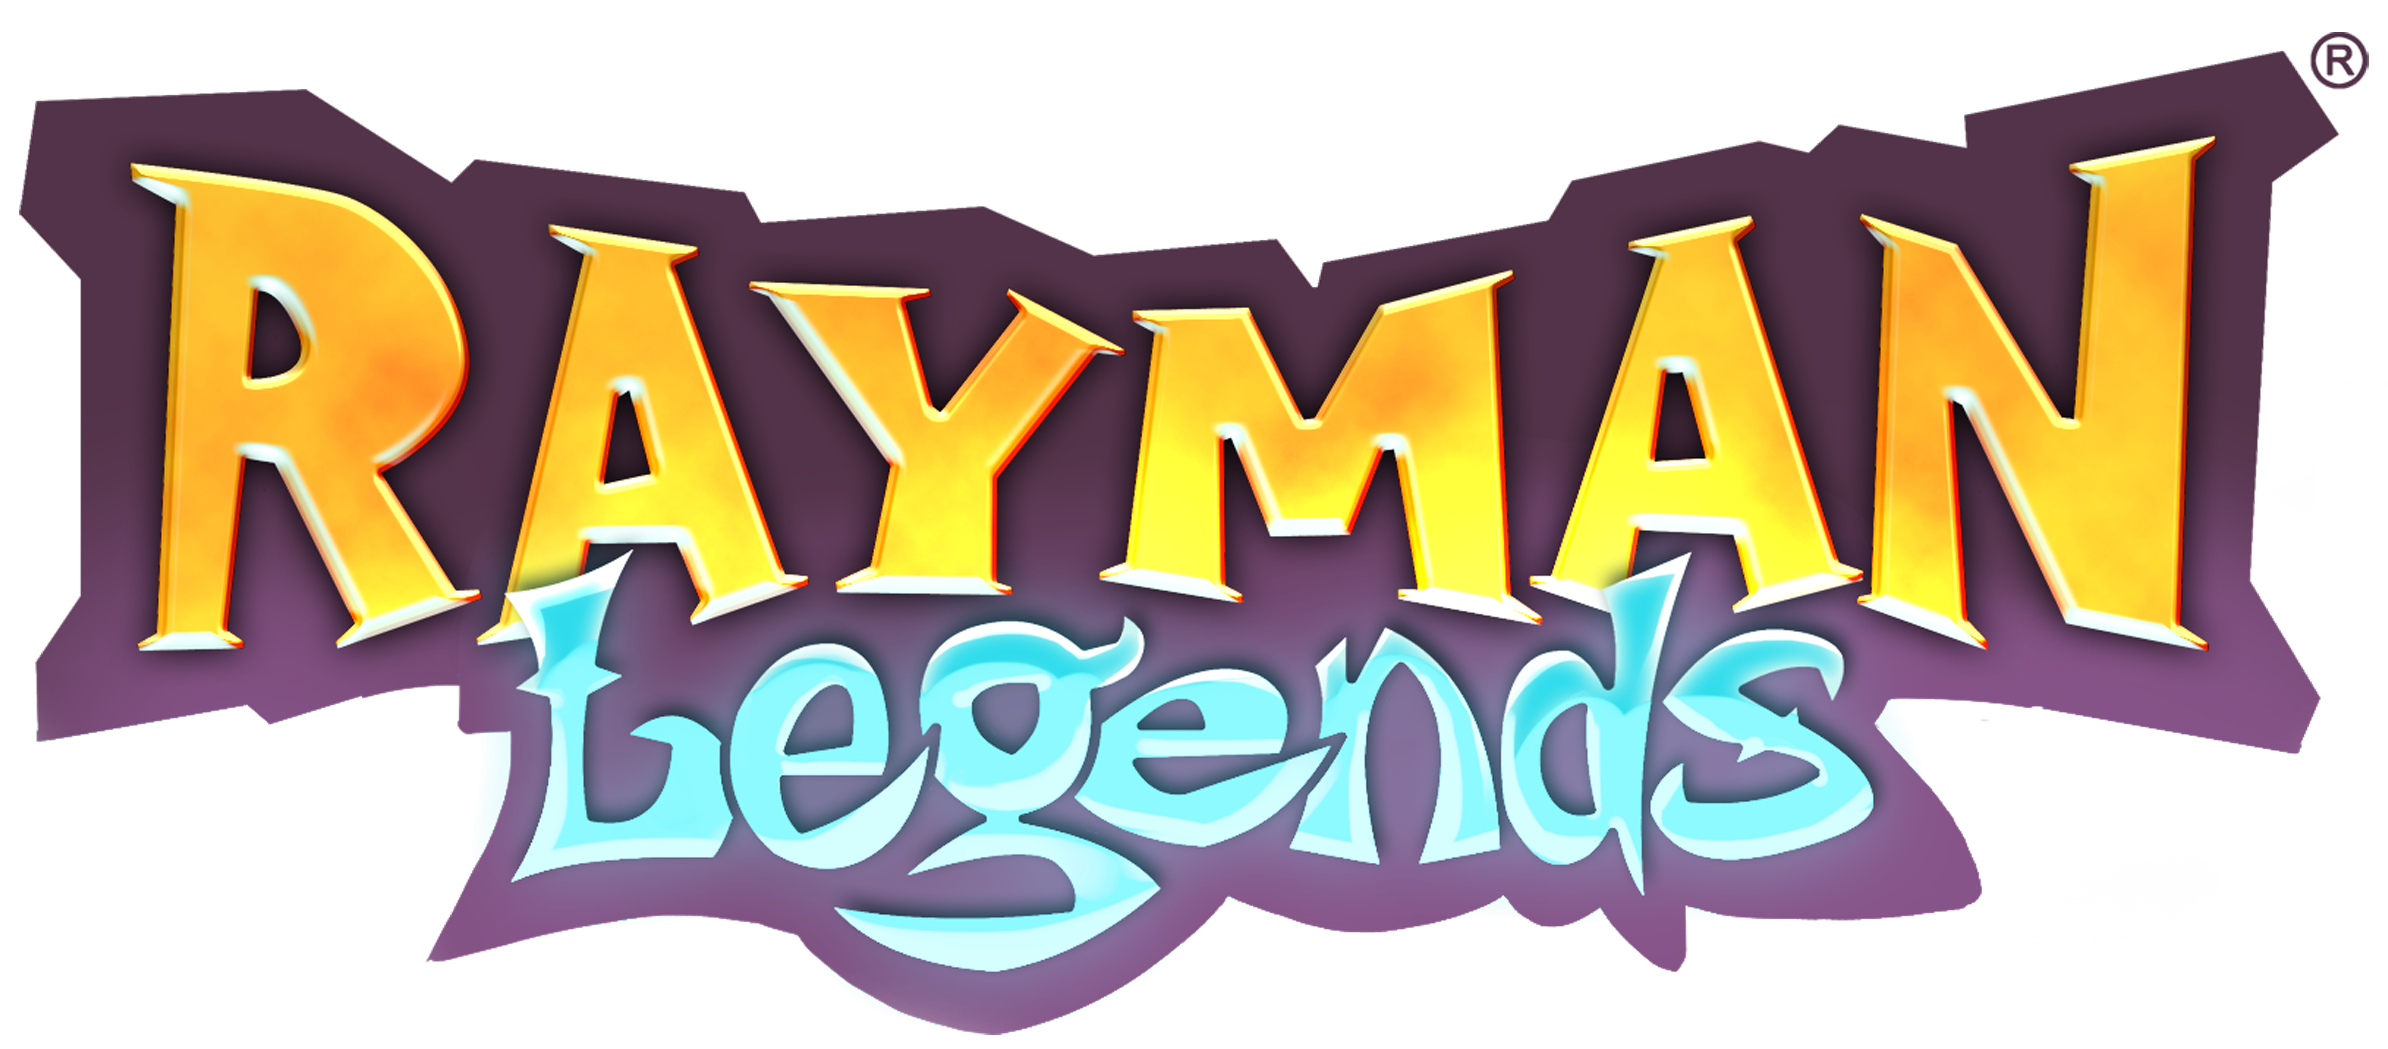 Rayman Legends Images - LaunchBox Games Database